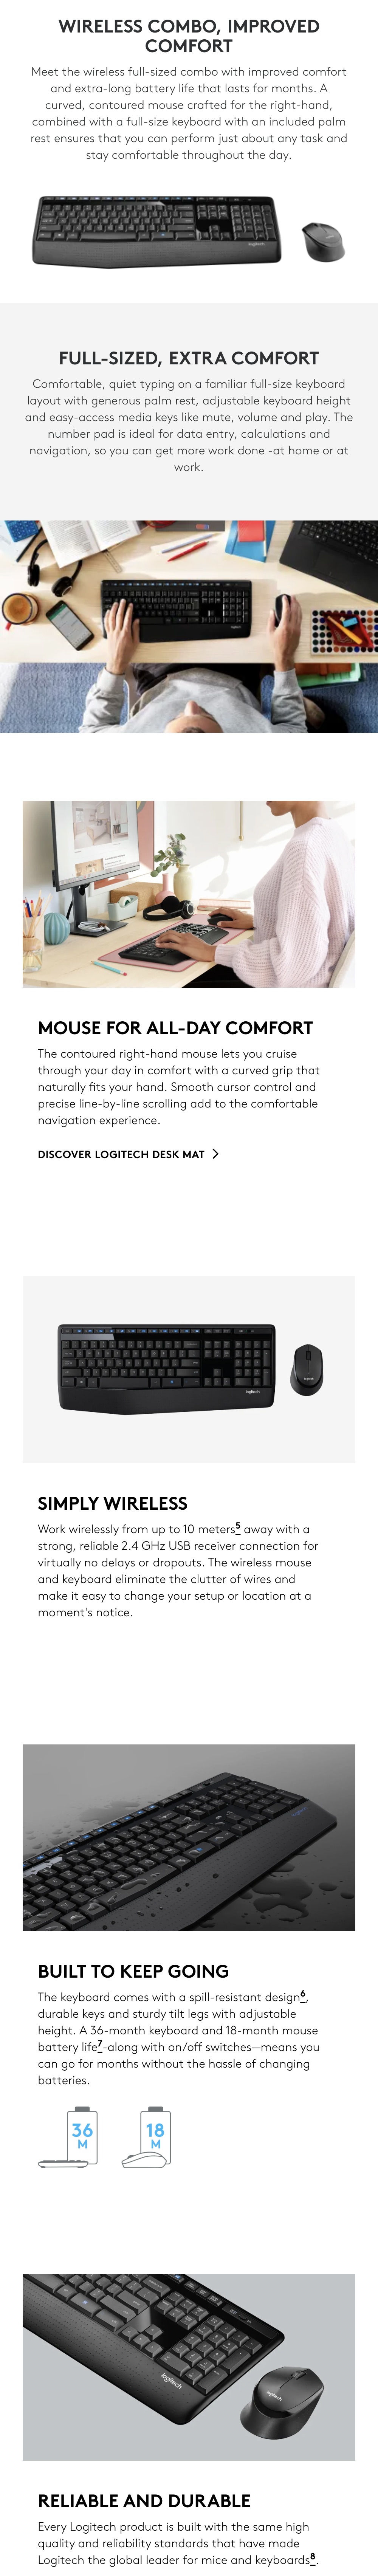 Logitech-MK345-Wireless-Keyboard-And-Mouse-Combo-Description